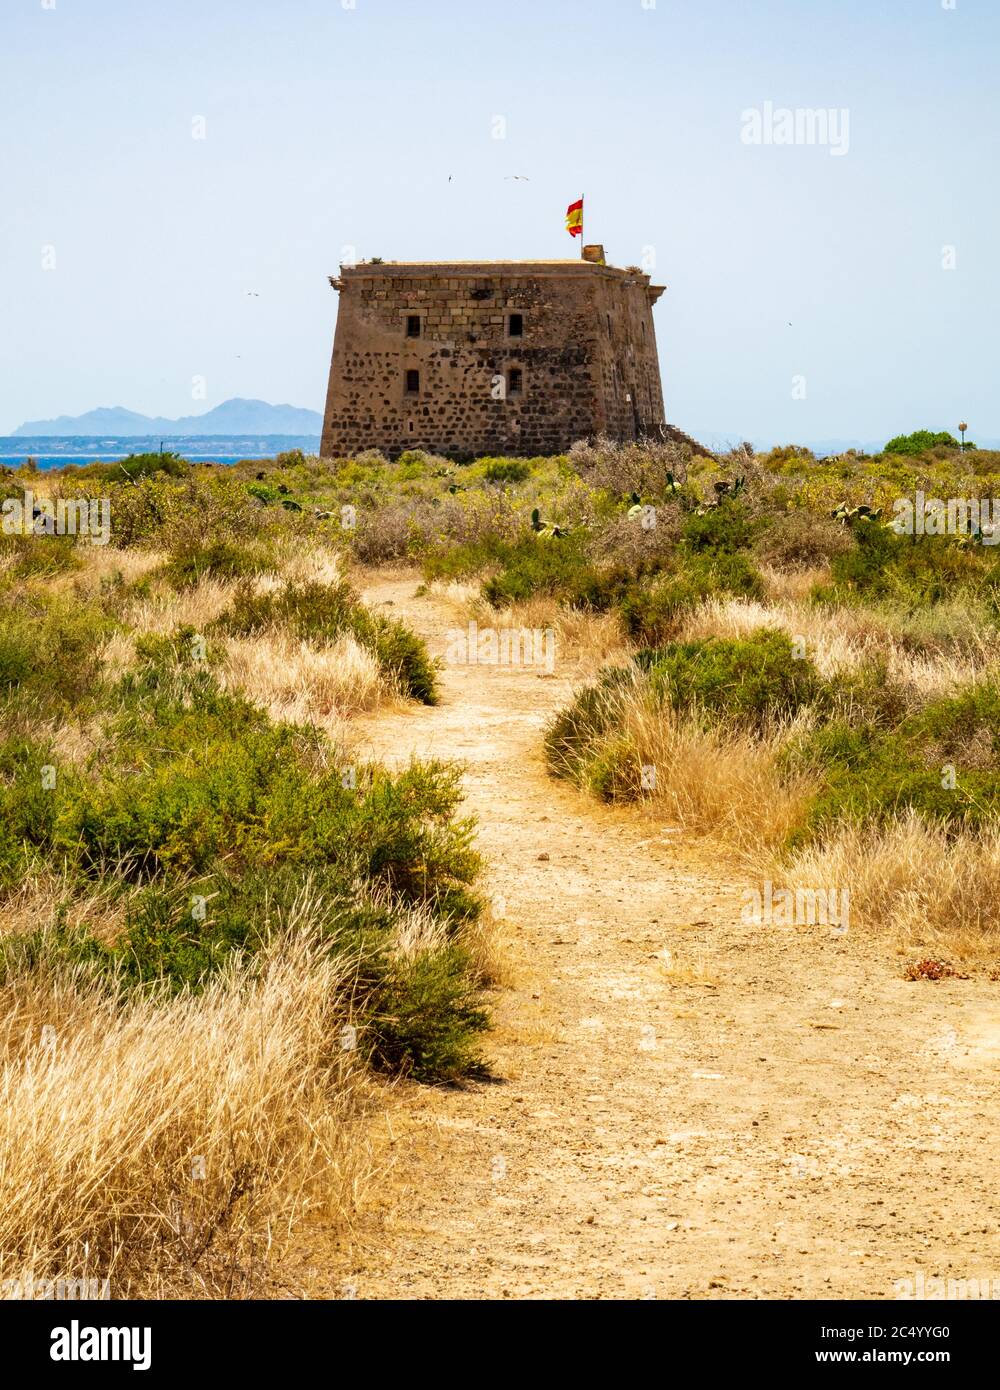 Torre de San José in Tabarca build in 1789. It is in the province of Alicante, Spain. Stock Photo